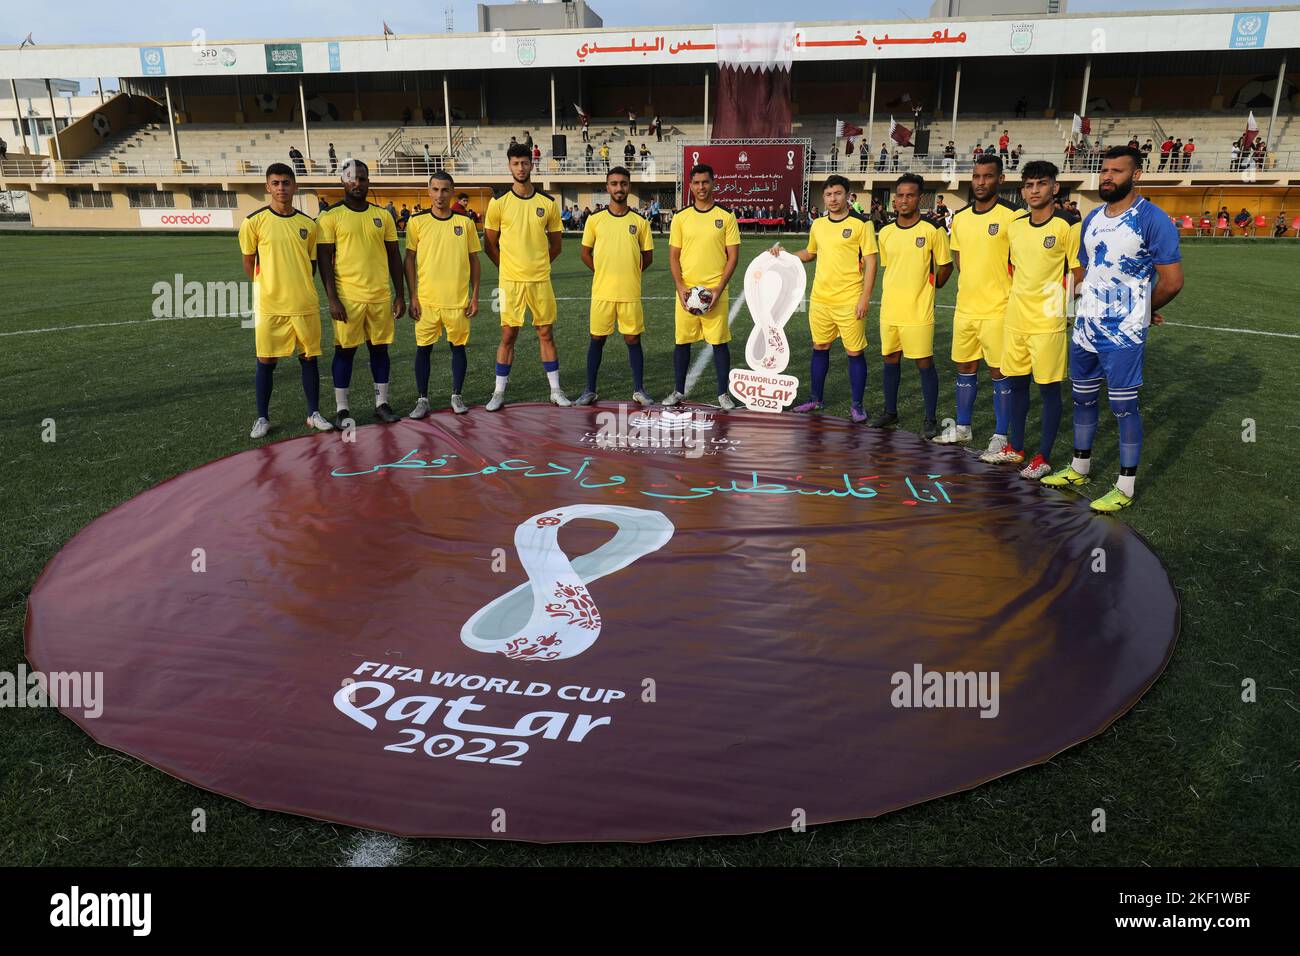 Players of Rafah youth club pose a 'Ecuador's' team match against the Khan Yunis Union Club, playing as 'Qatar's' team, in a mock World Cup 2022 Qatar Stock Photo